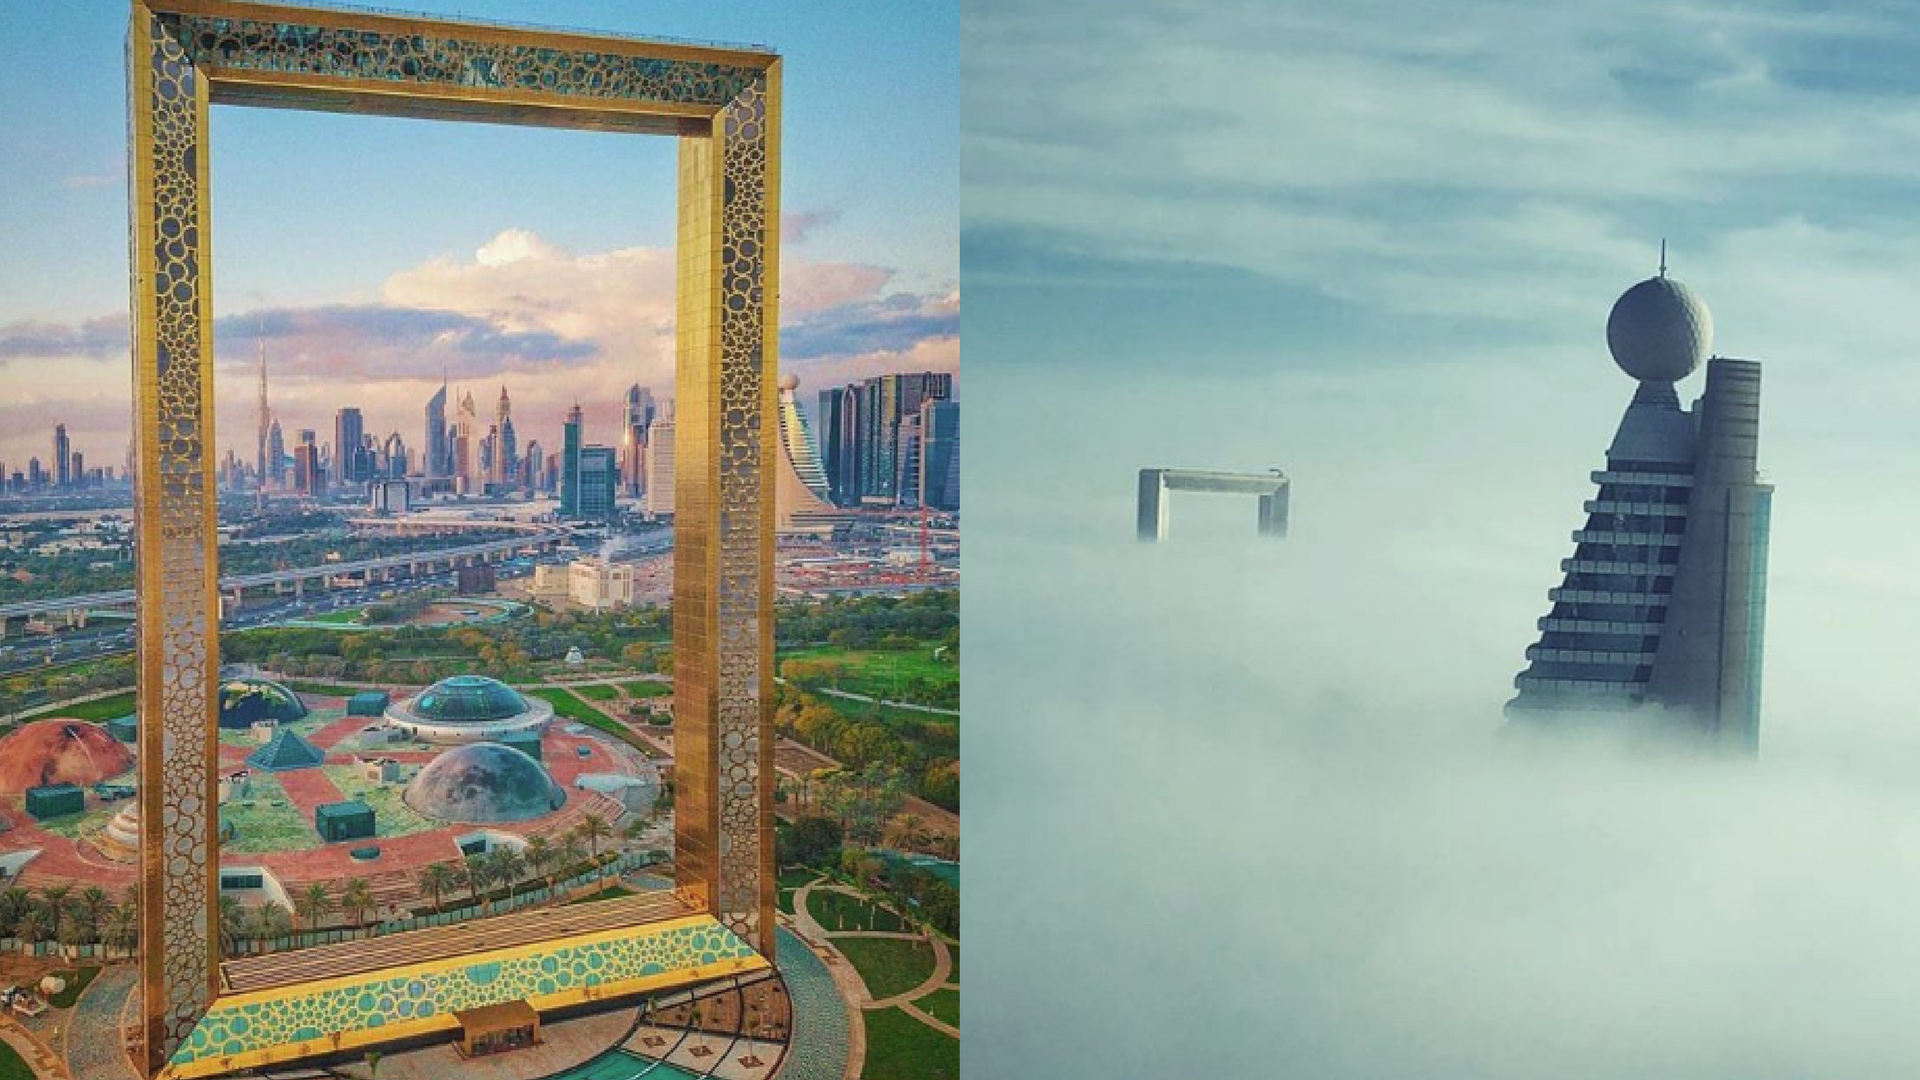 The Best Instagrams Of The Dubai Frame